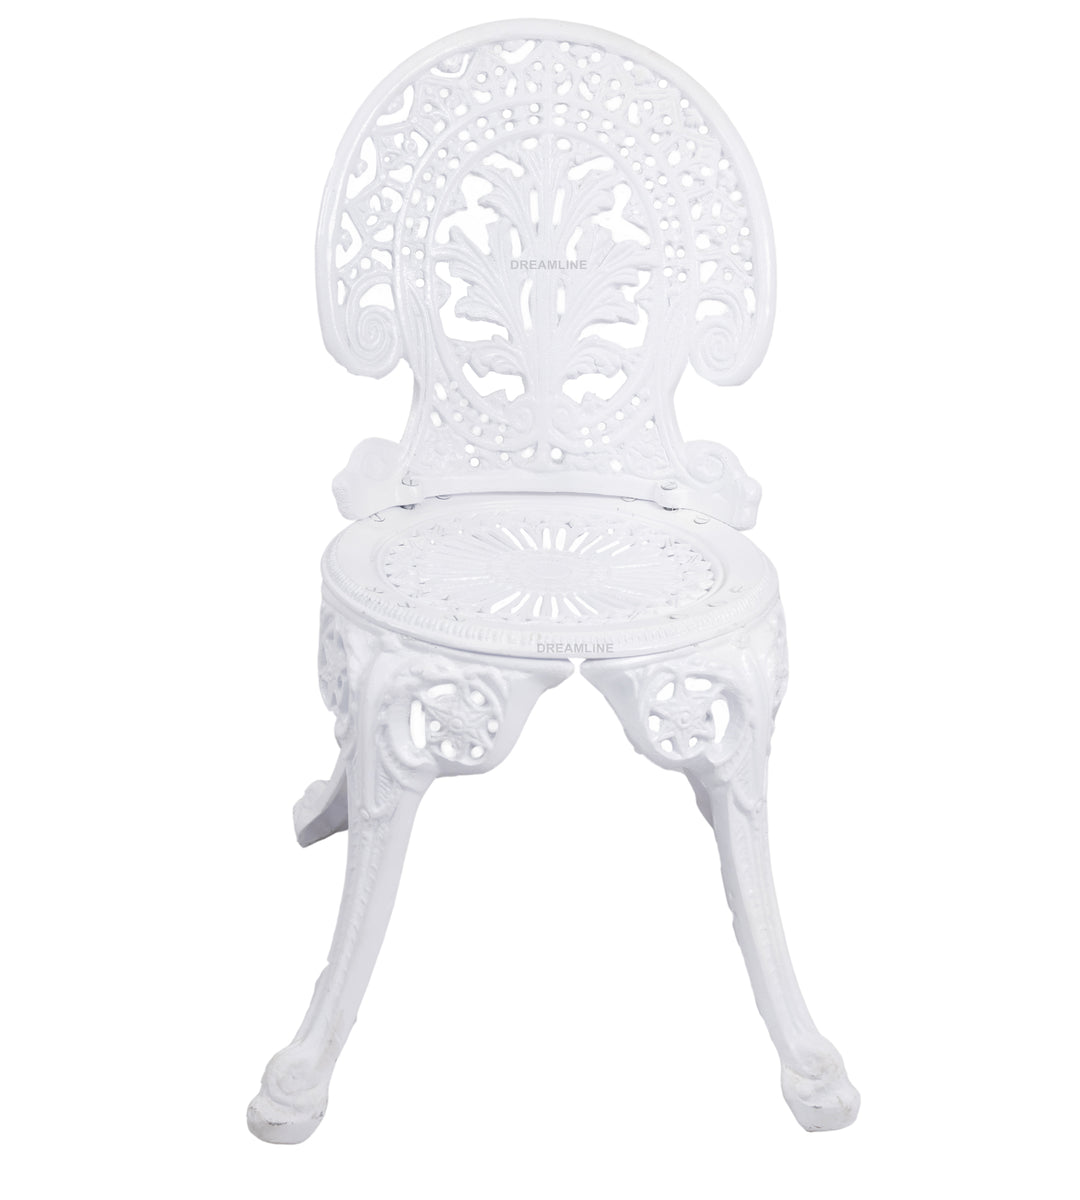 Zenck Cast Aluminium Garden Patio Single Seater Chair (White)